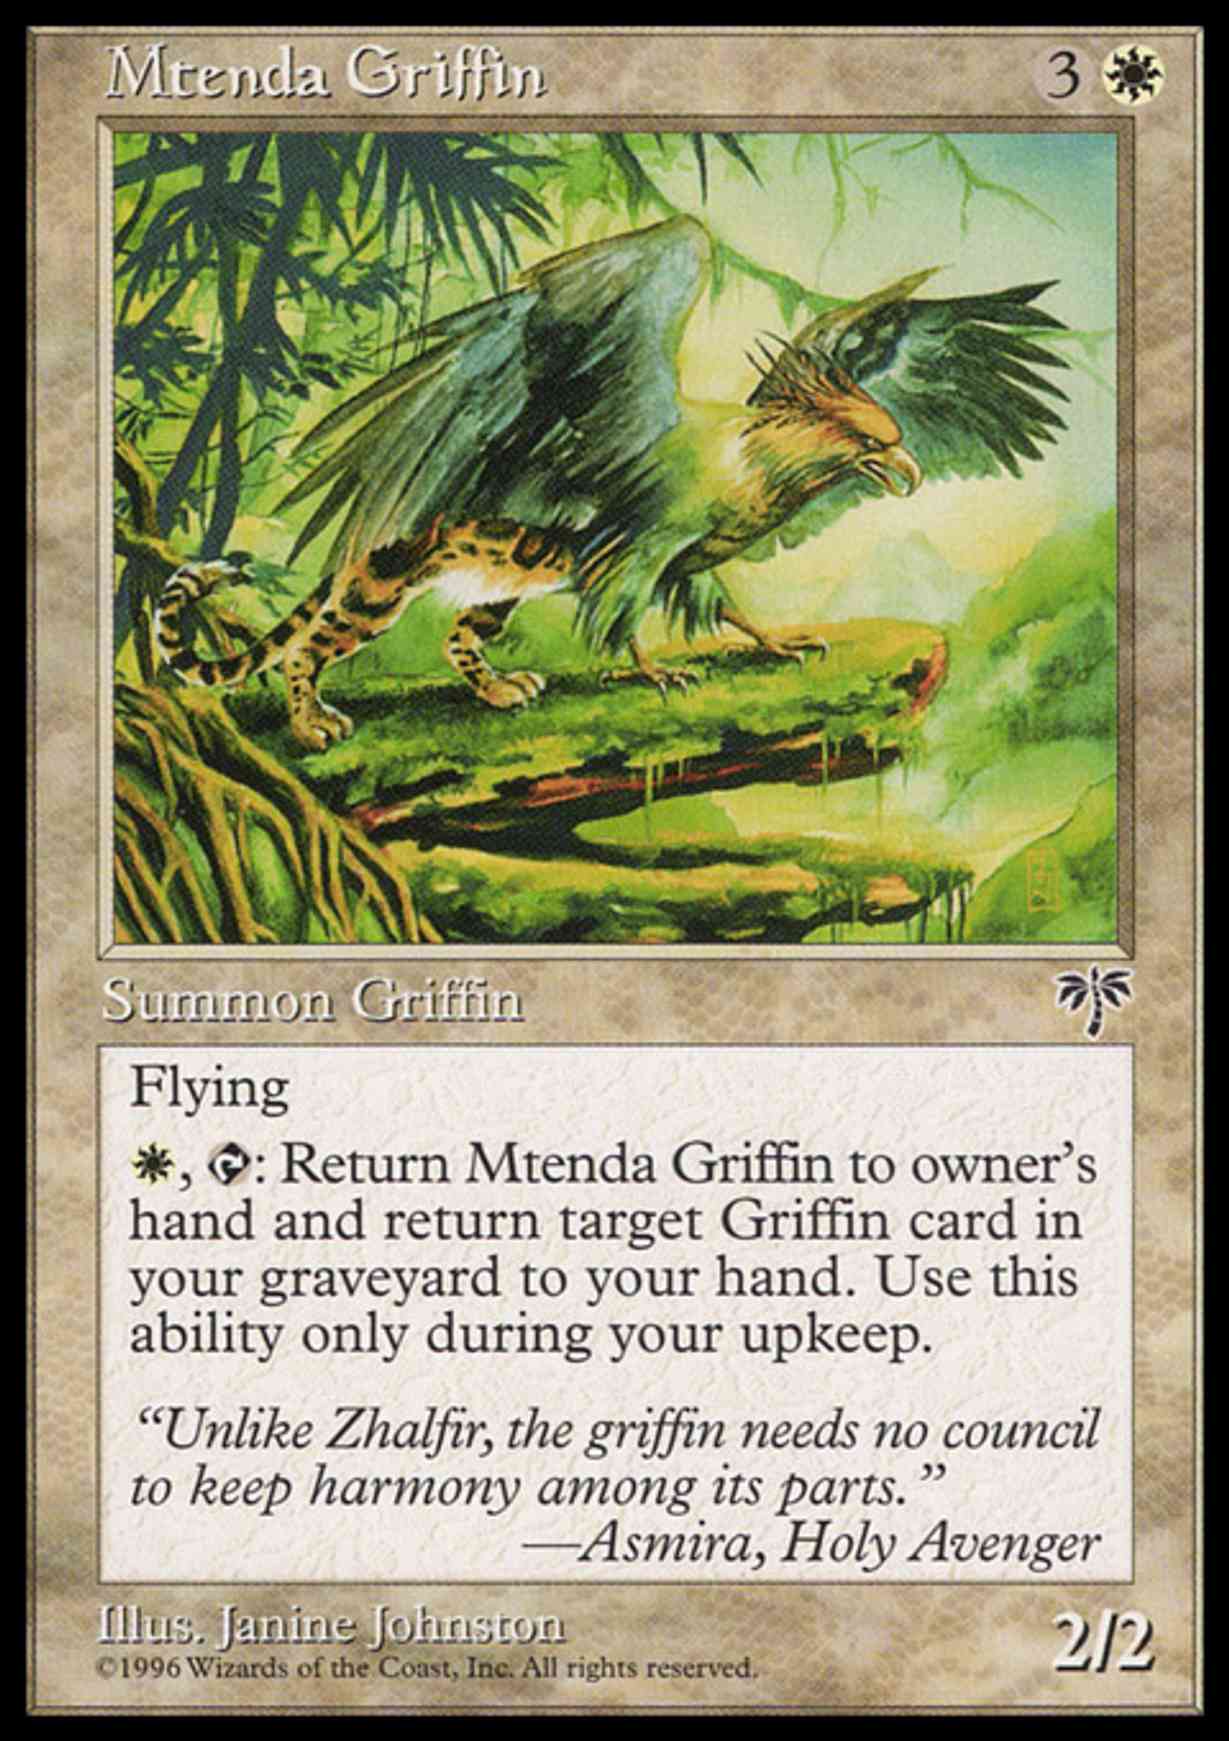 Mtenda Griffin magic card front